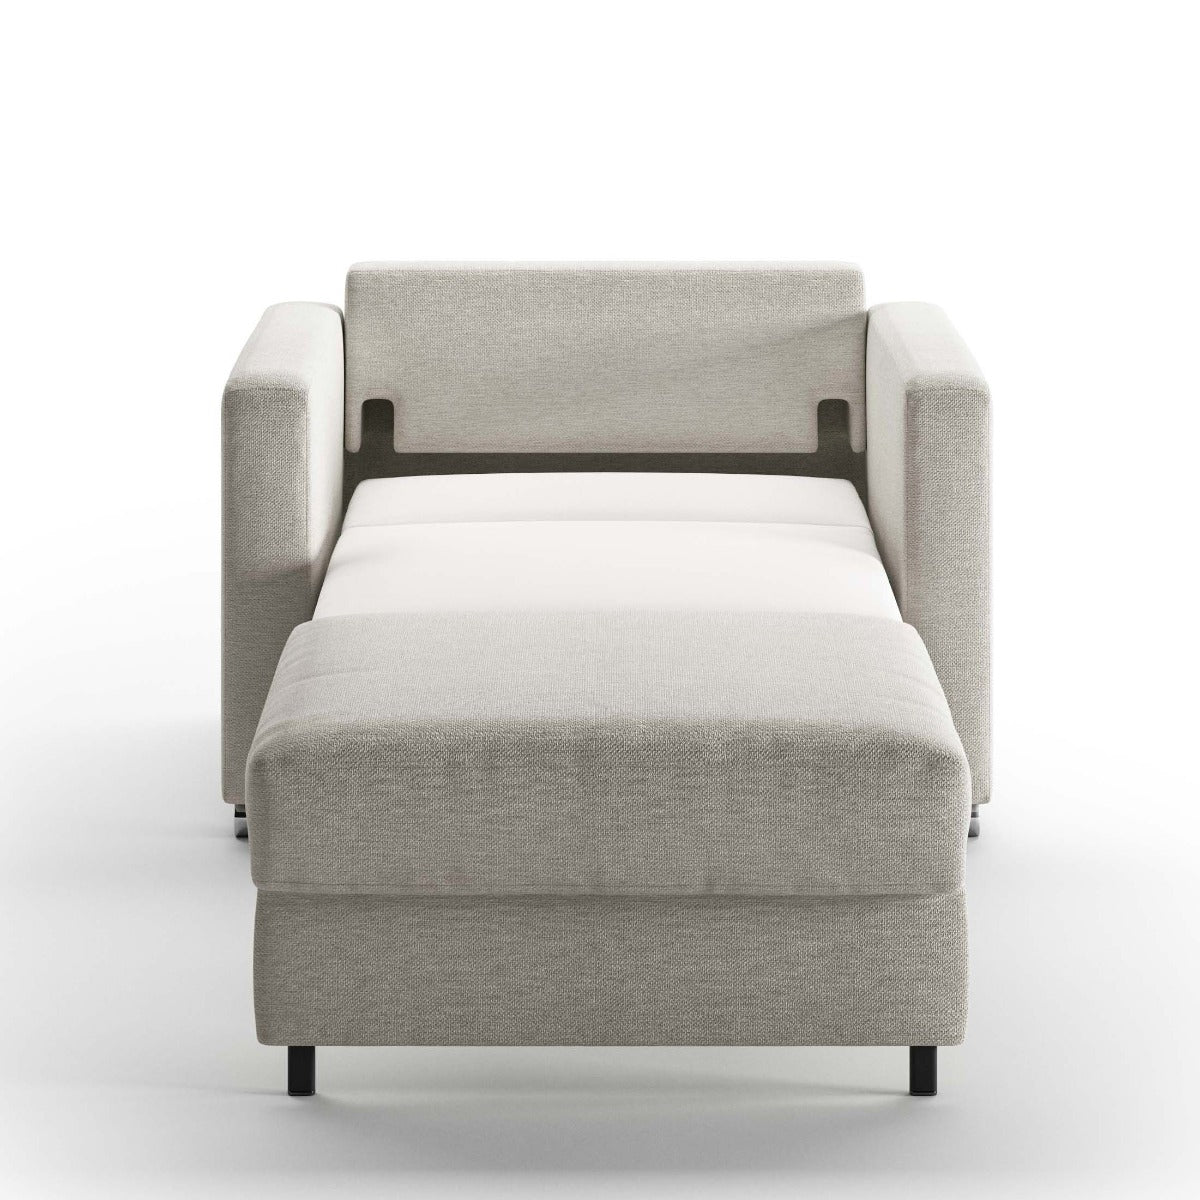 Luonto Furniture Fantasy Cot Chair Sleeper - Fun 496 - 217/6 Chrome